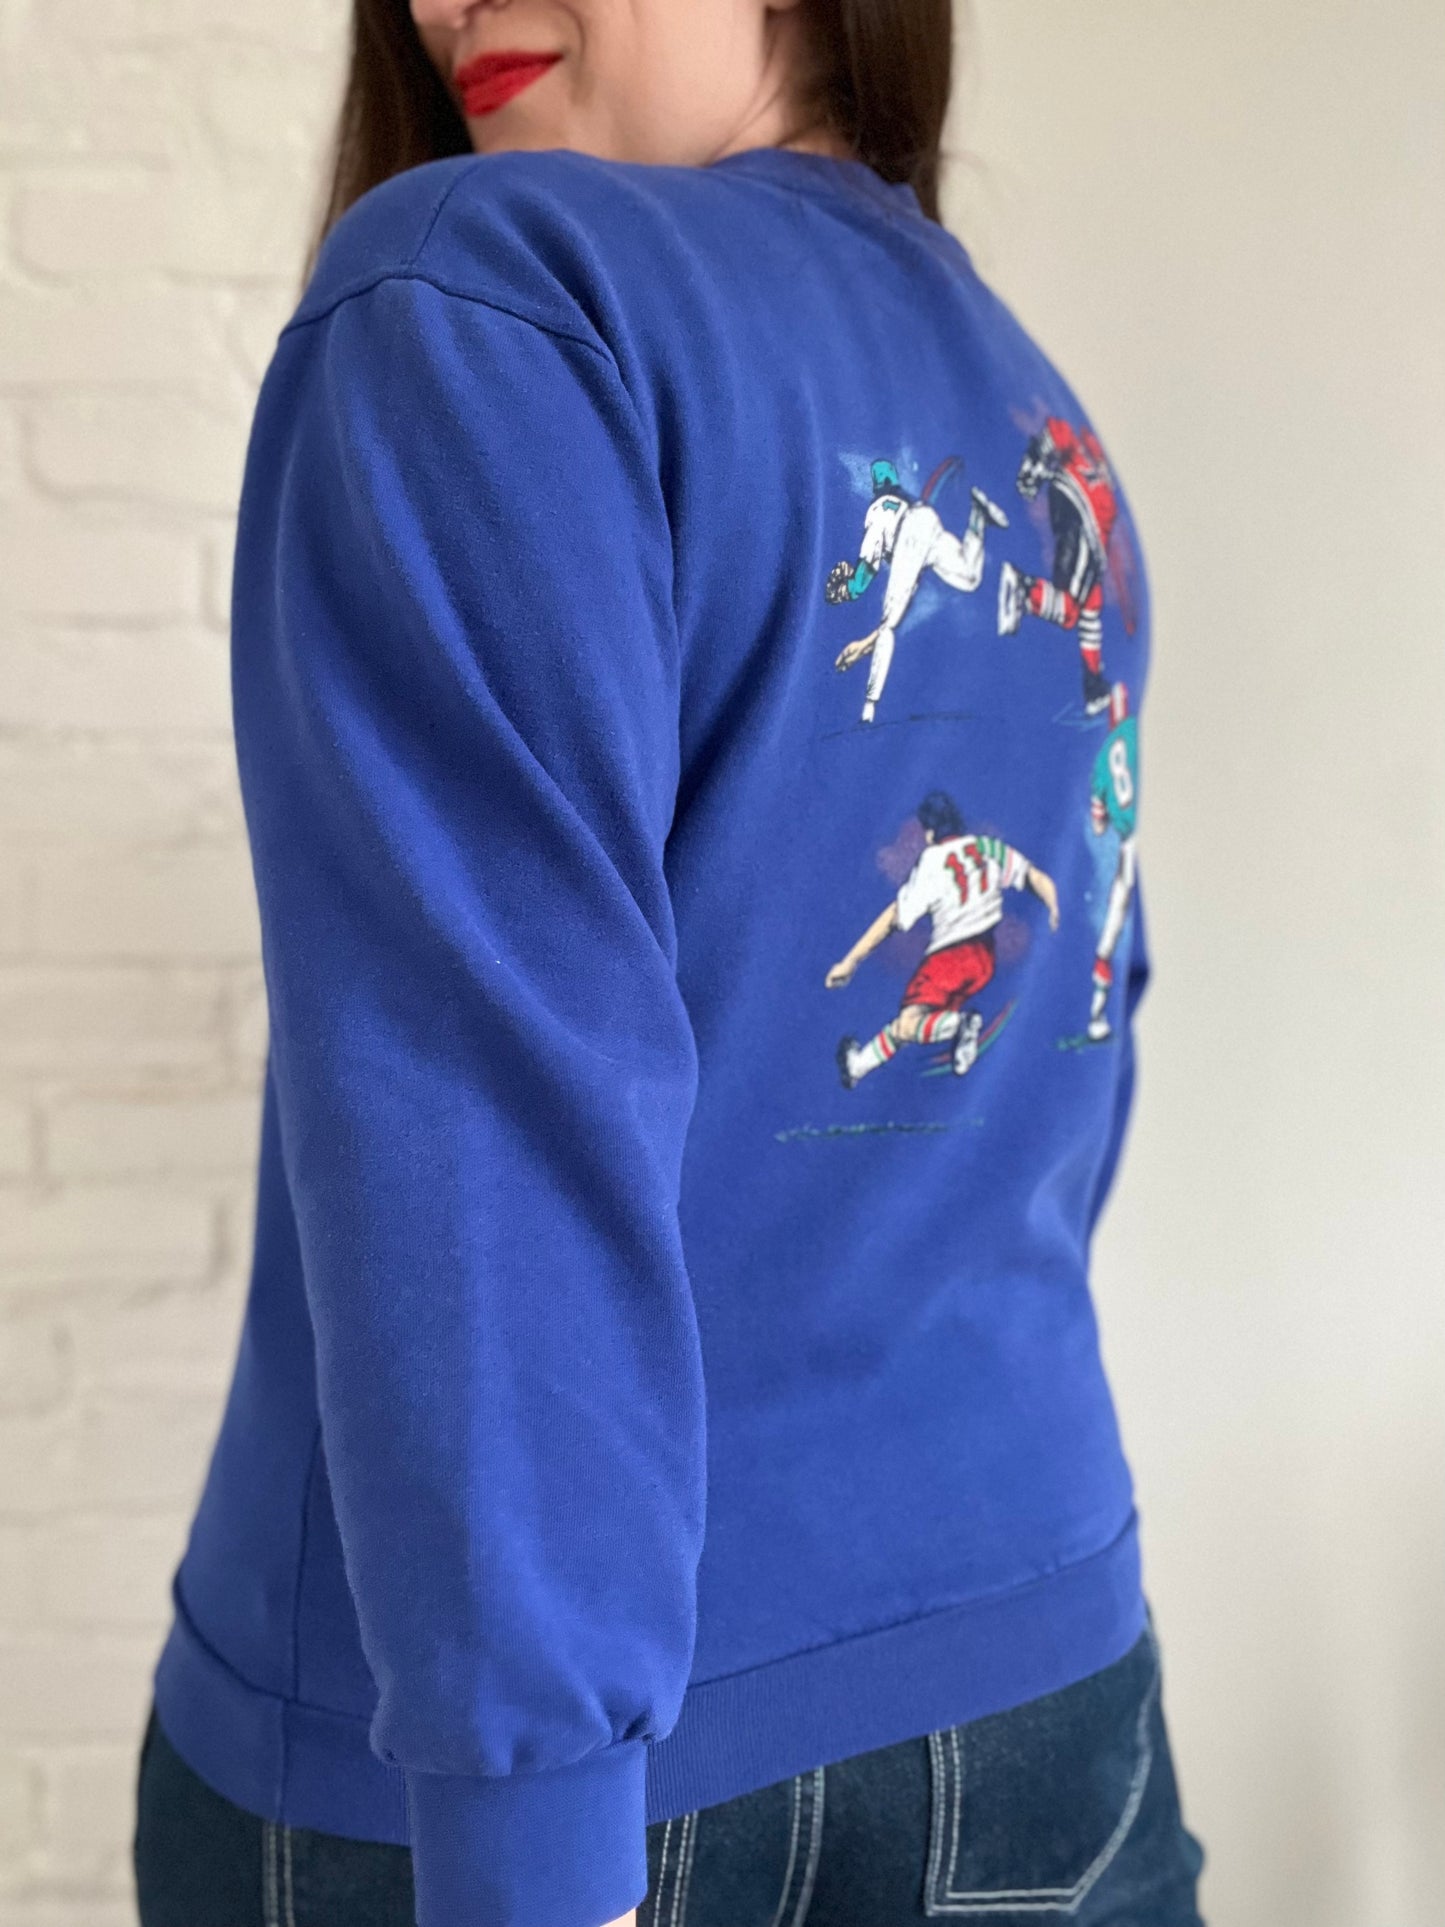 Multi-Sport Northern Getaway Graphic Sweater - XS/S